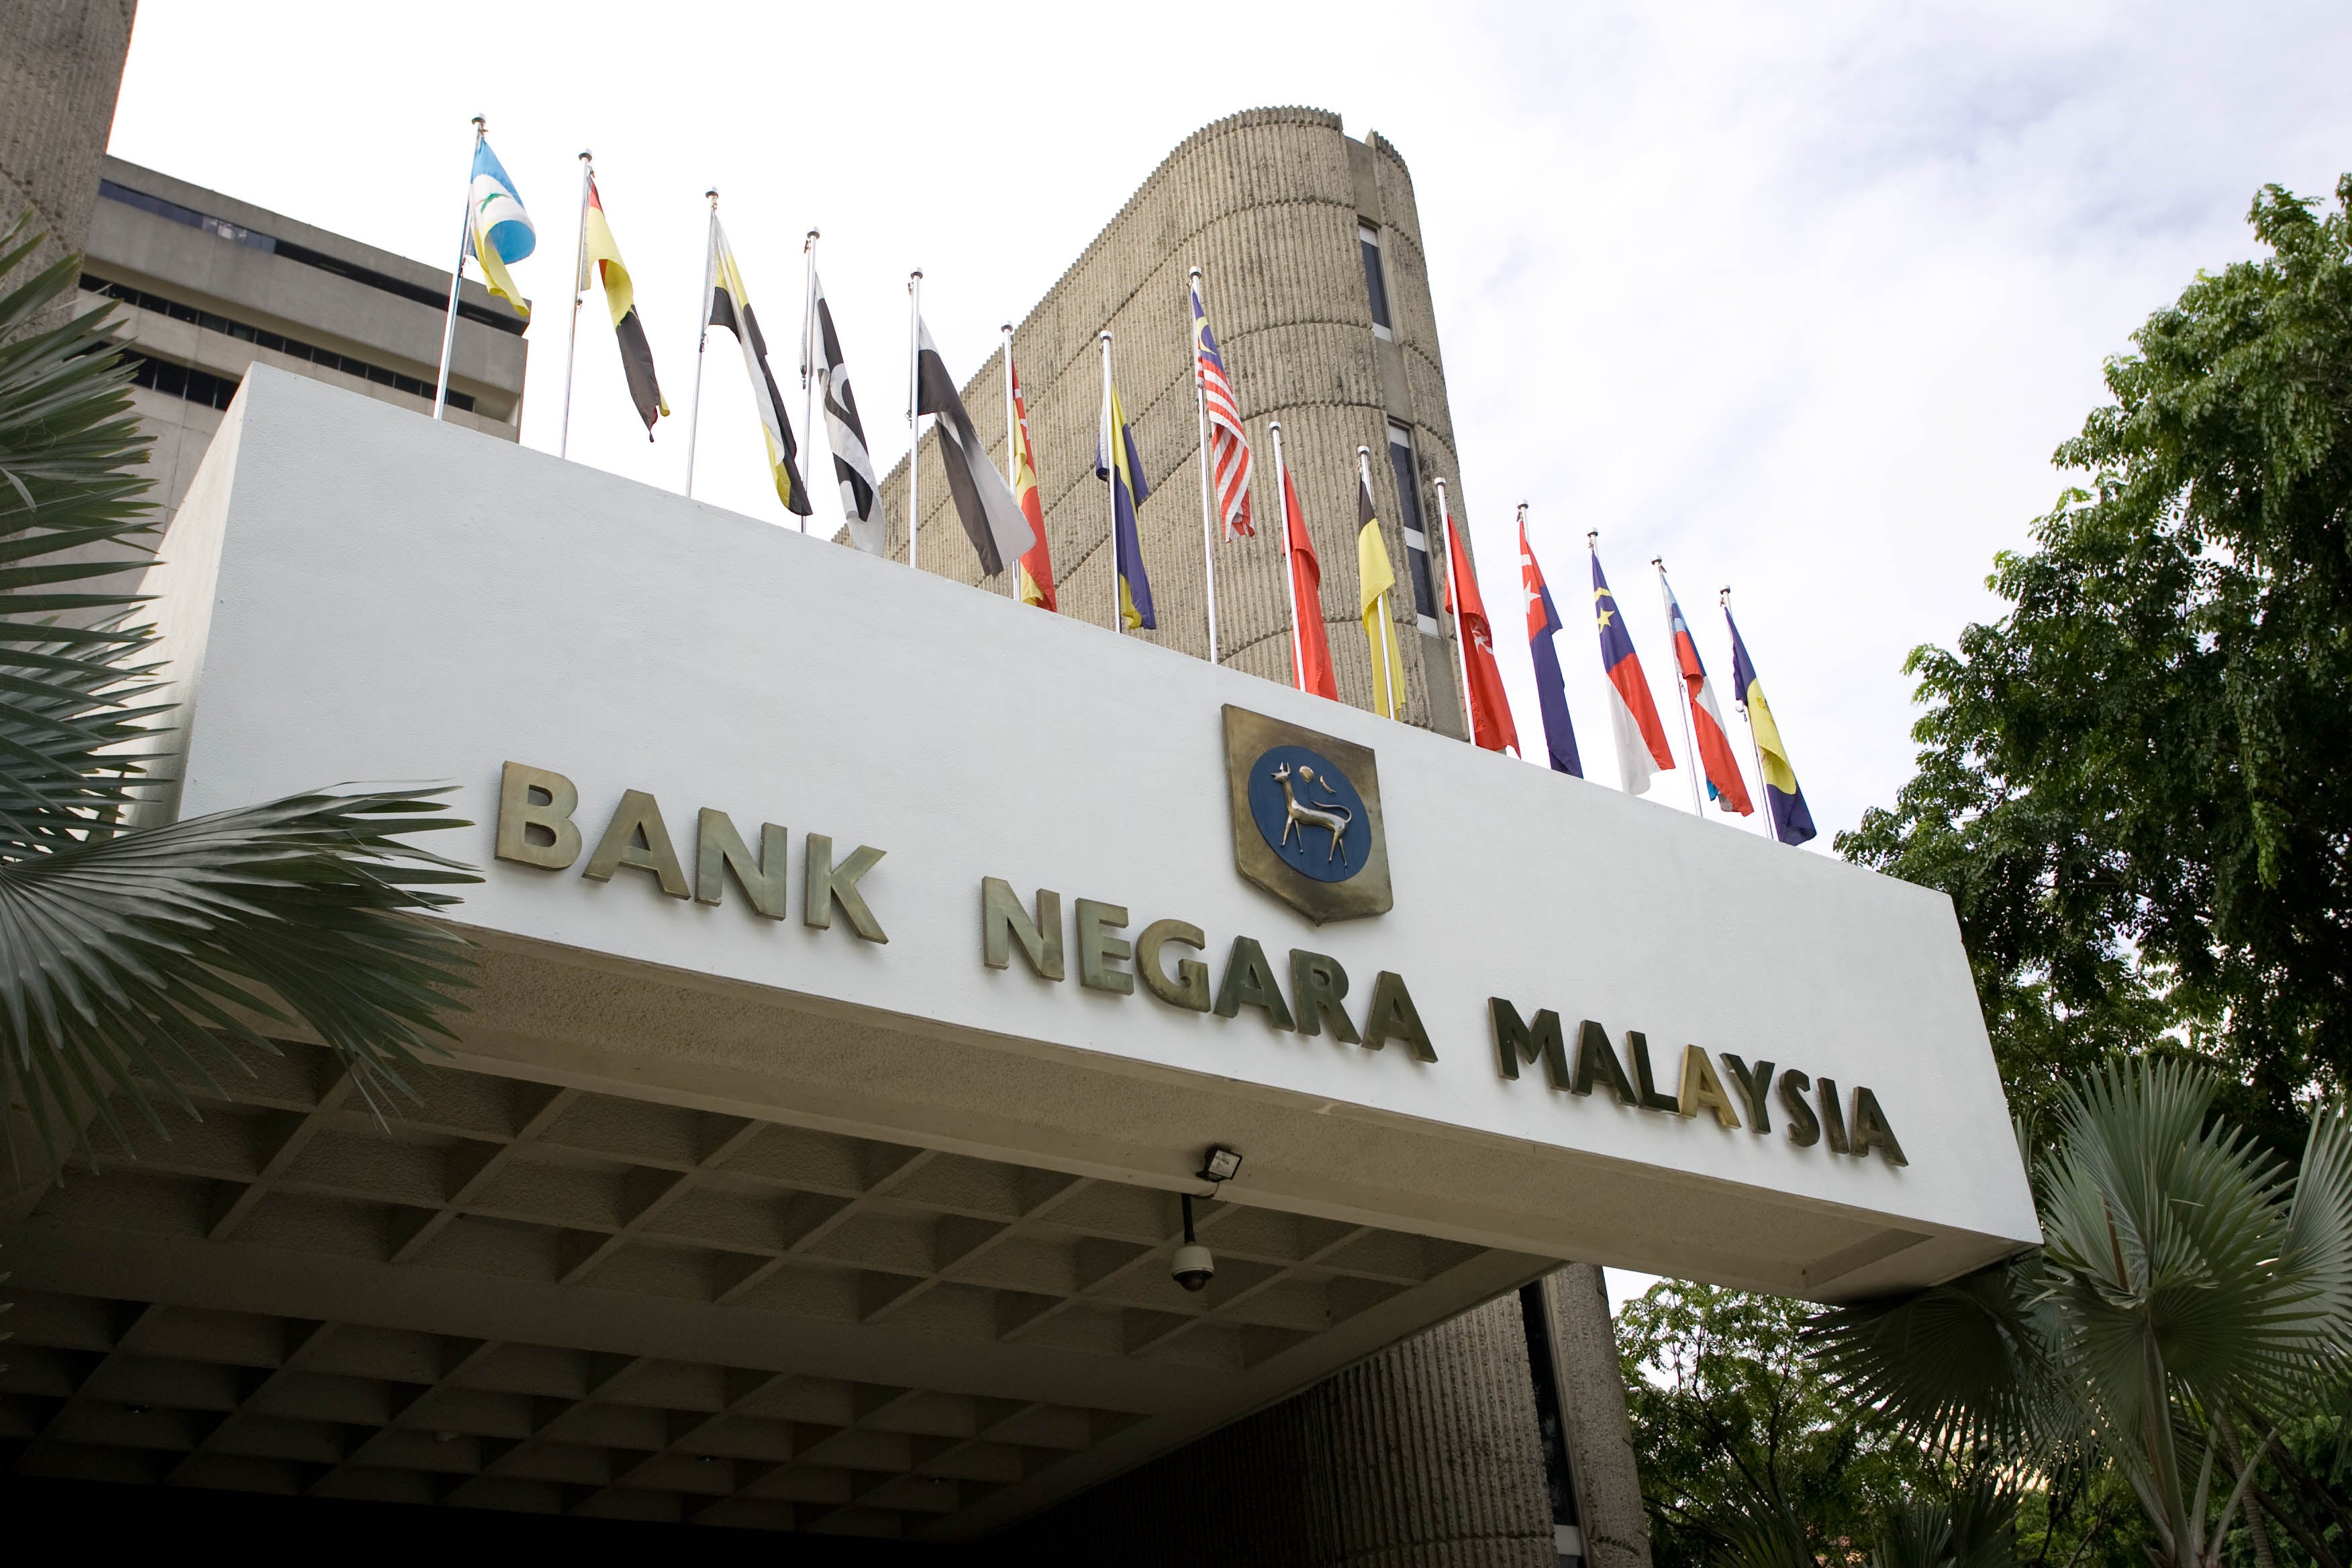 Malaysians Need to Beware Fake Money Lenders, Warns Bank Negara - WORLD OF BUZZ